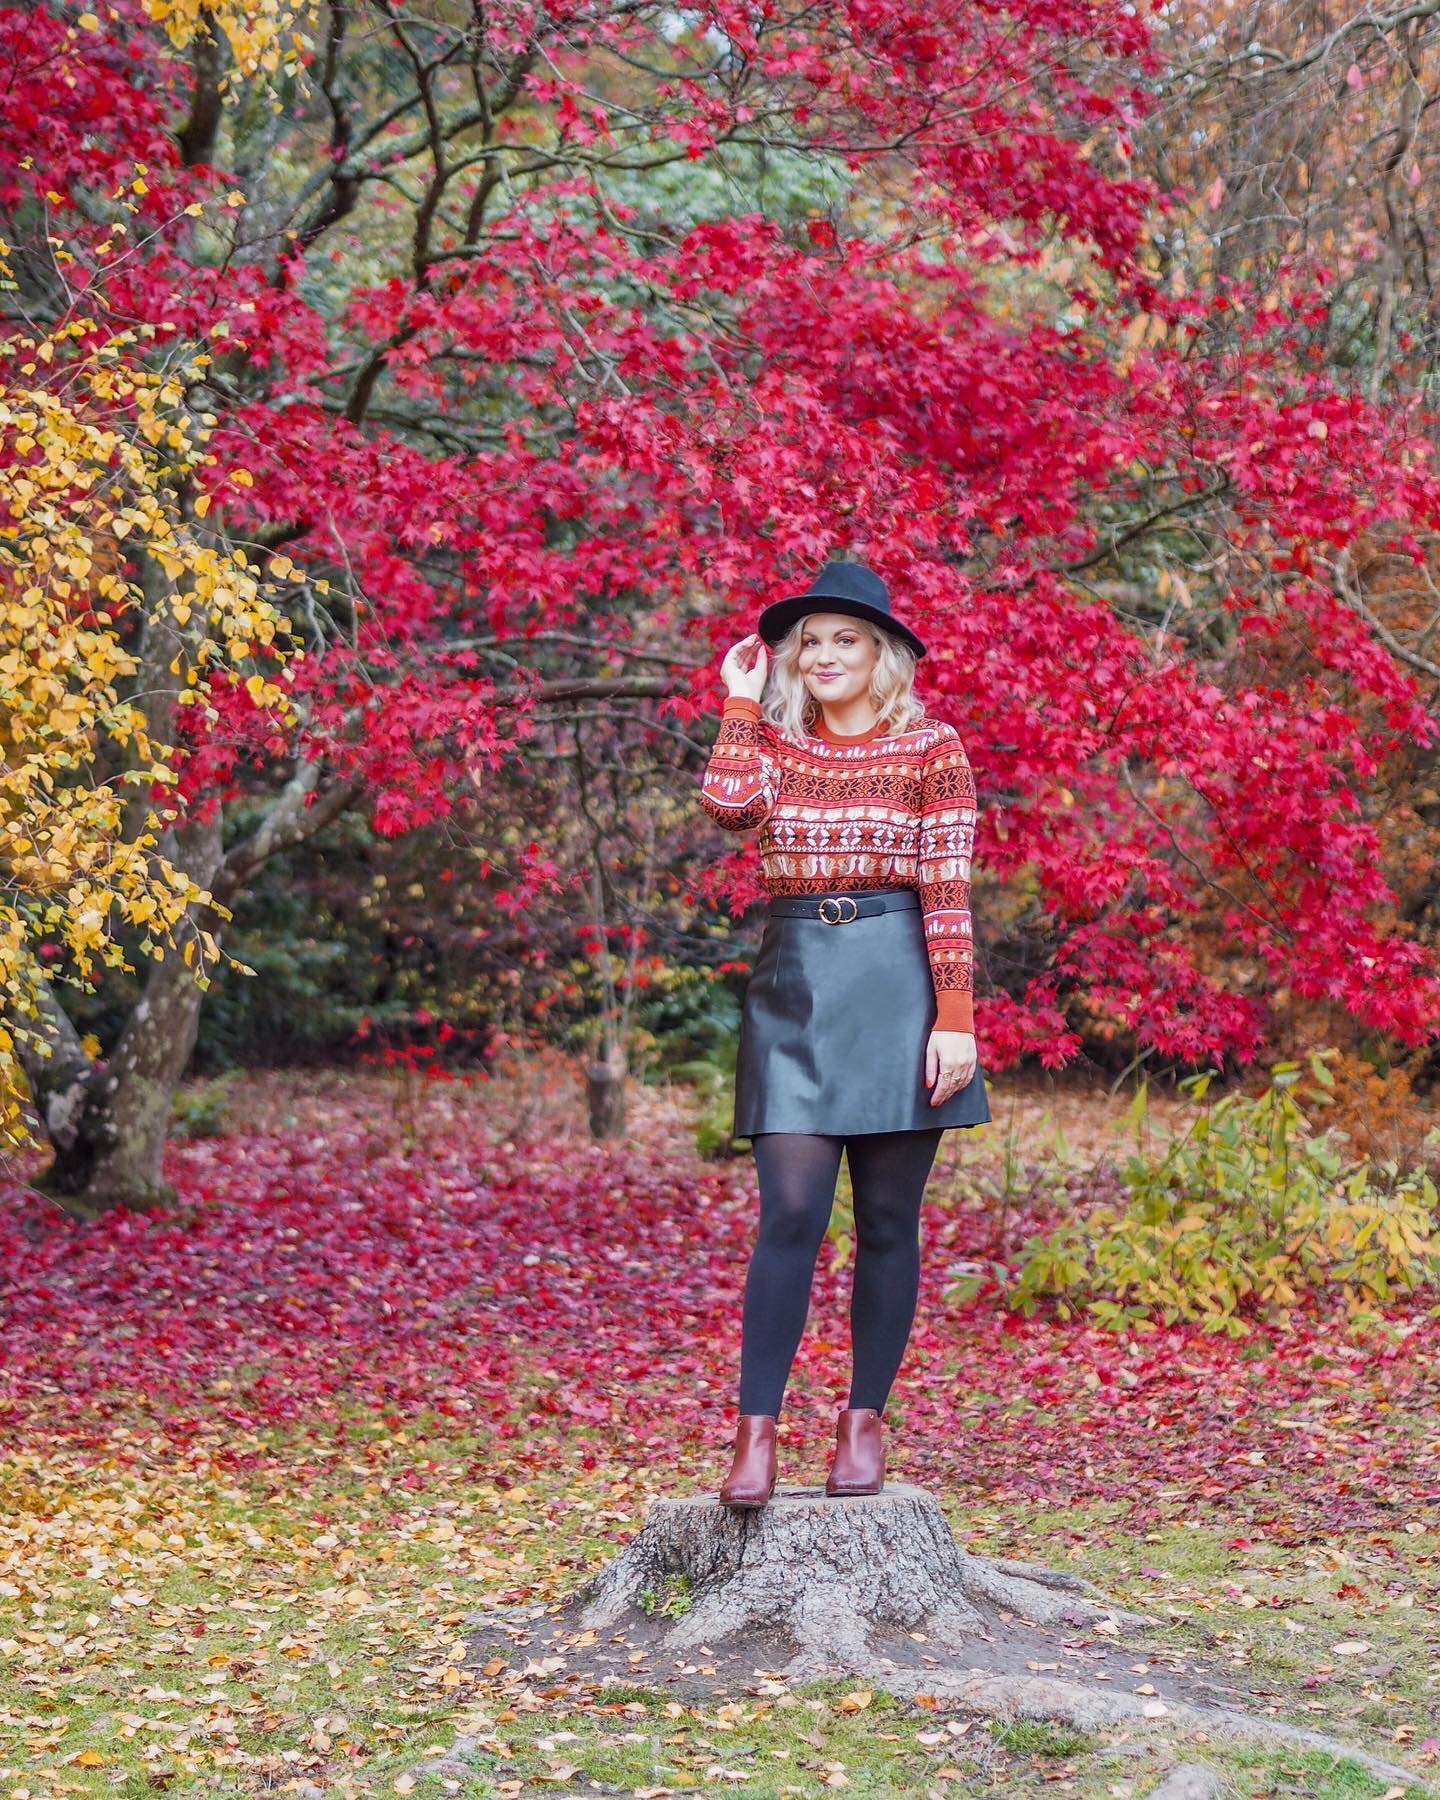 Autumn Colour at Sheffield Park, Katie Kirk Loves, UK Blogger, Autumn Photography, National Trust, UK Gardens, Sussex UK, Sheffield Park and Gardens, Fall Photography, Autumn Leaves, Autumn Colour, Autumn Fashion